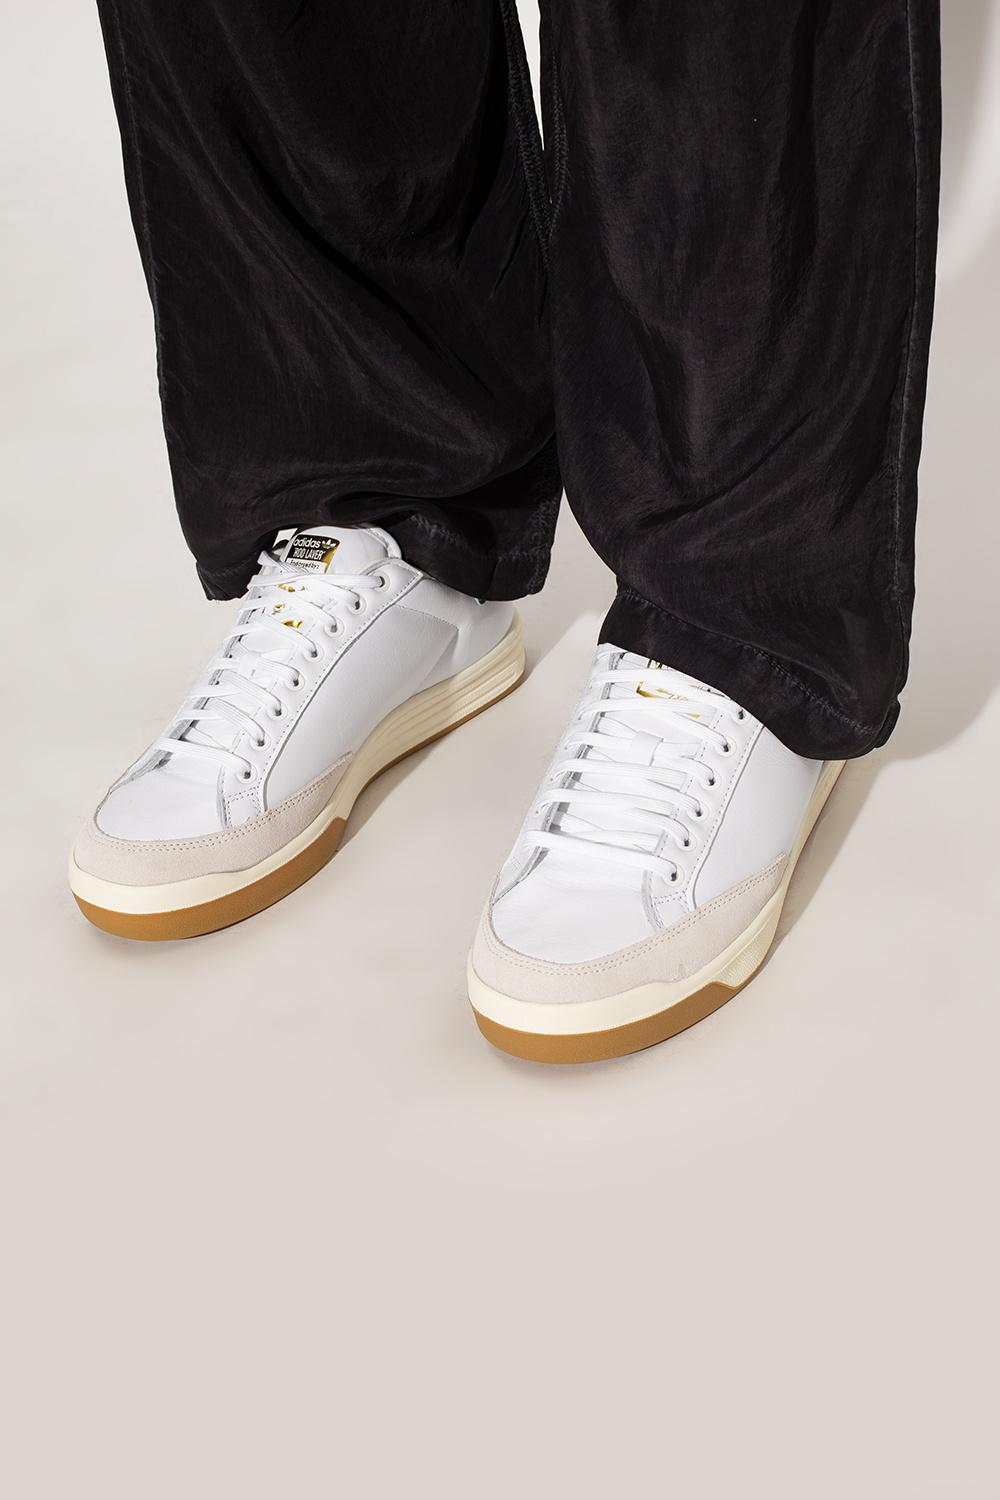 adidas Originals 'rod Laver' Sneakers White for Men | Lyst